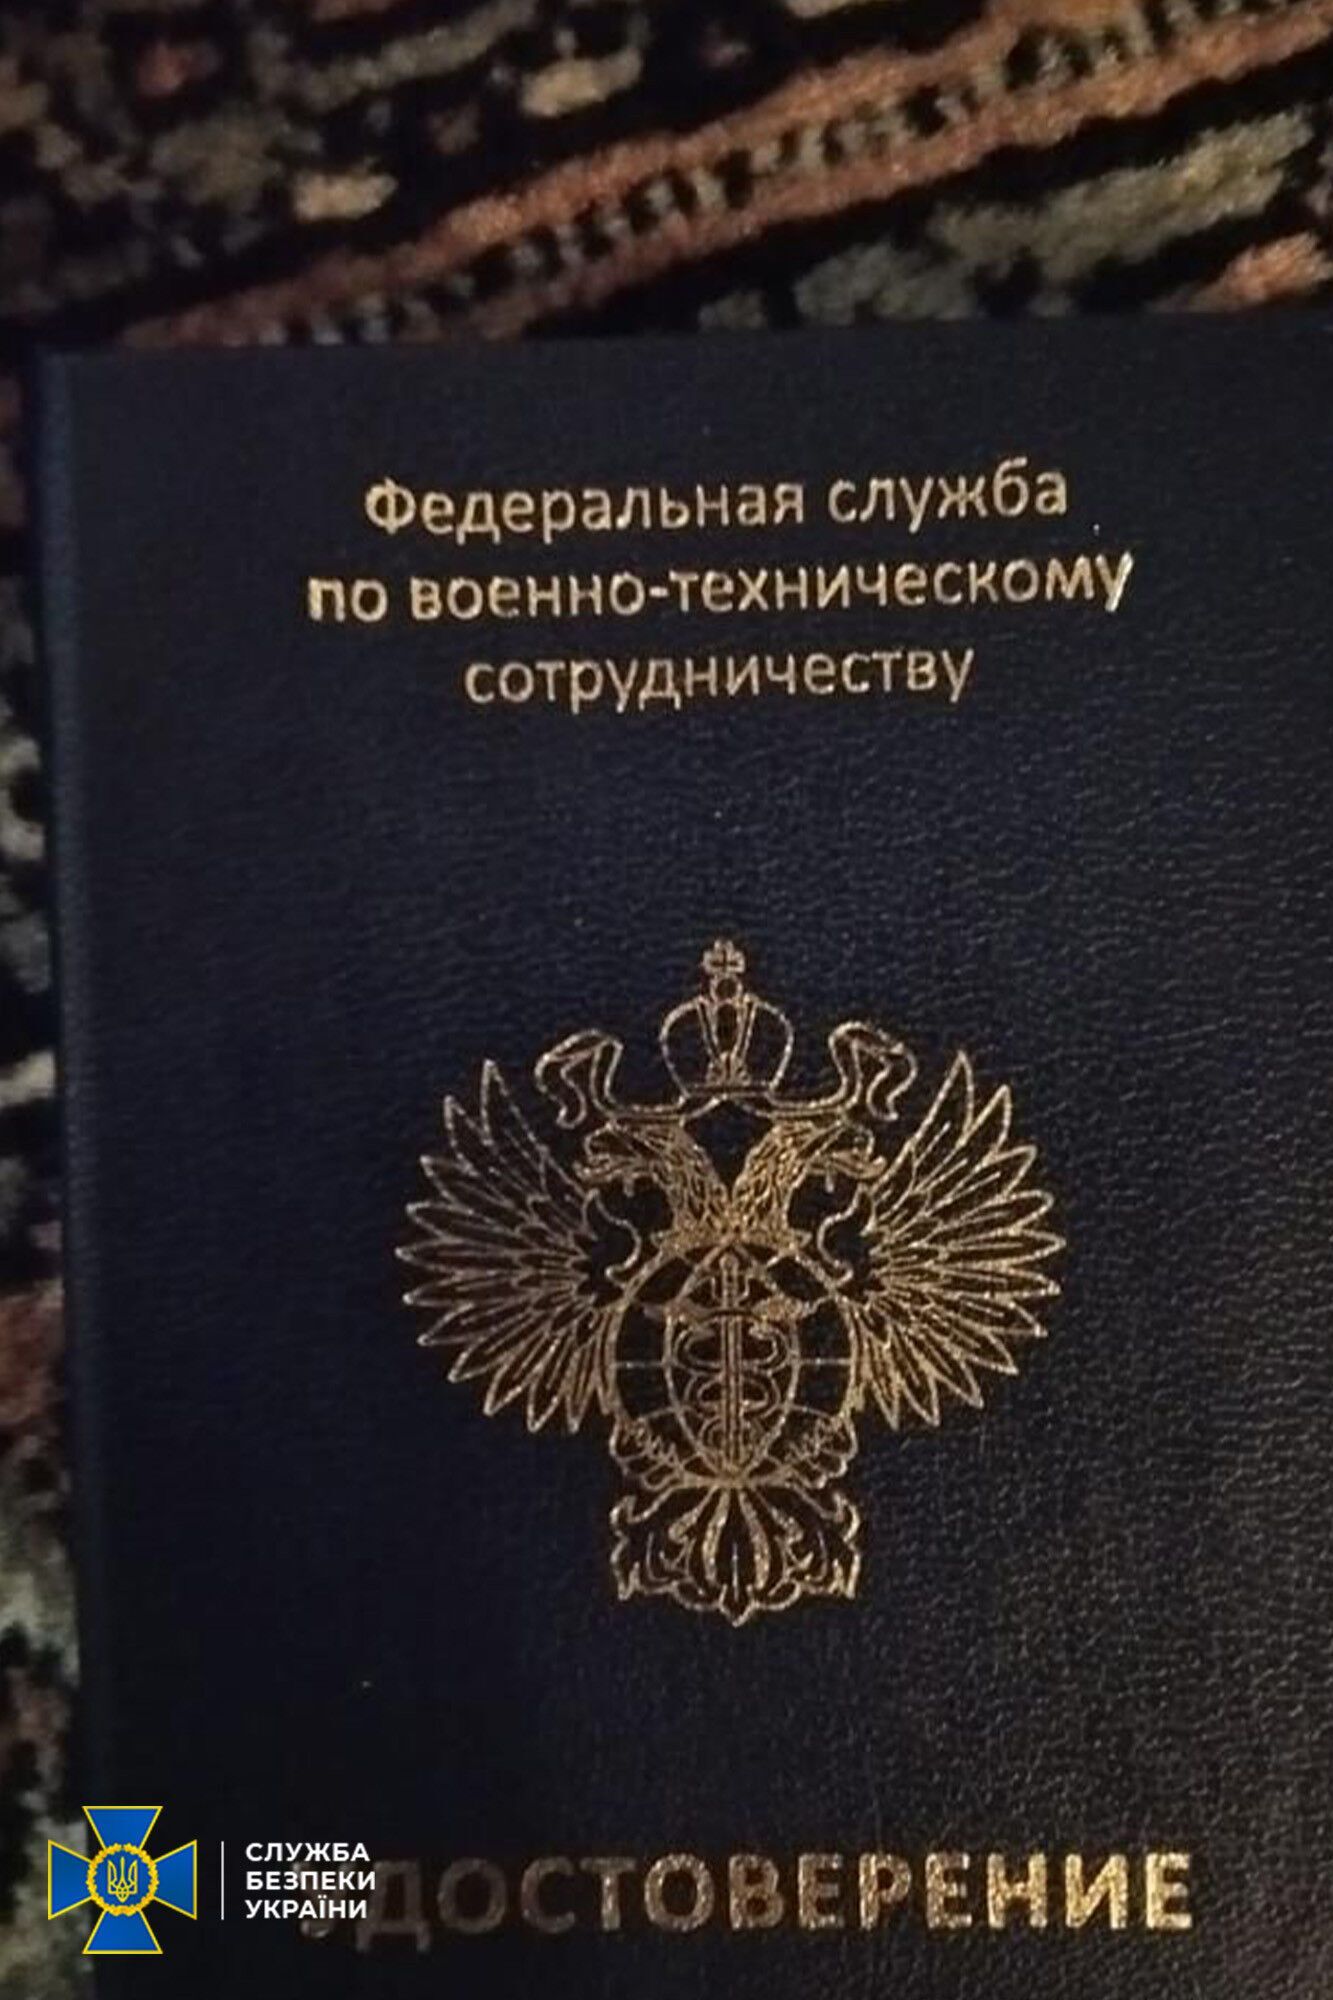 СБУ подтвердила задержание президента ’’Мотор Сичи’’ Богуслаева по подозрению в госизмене: все детали